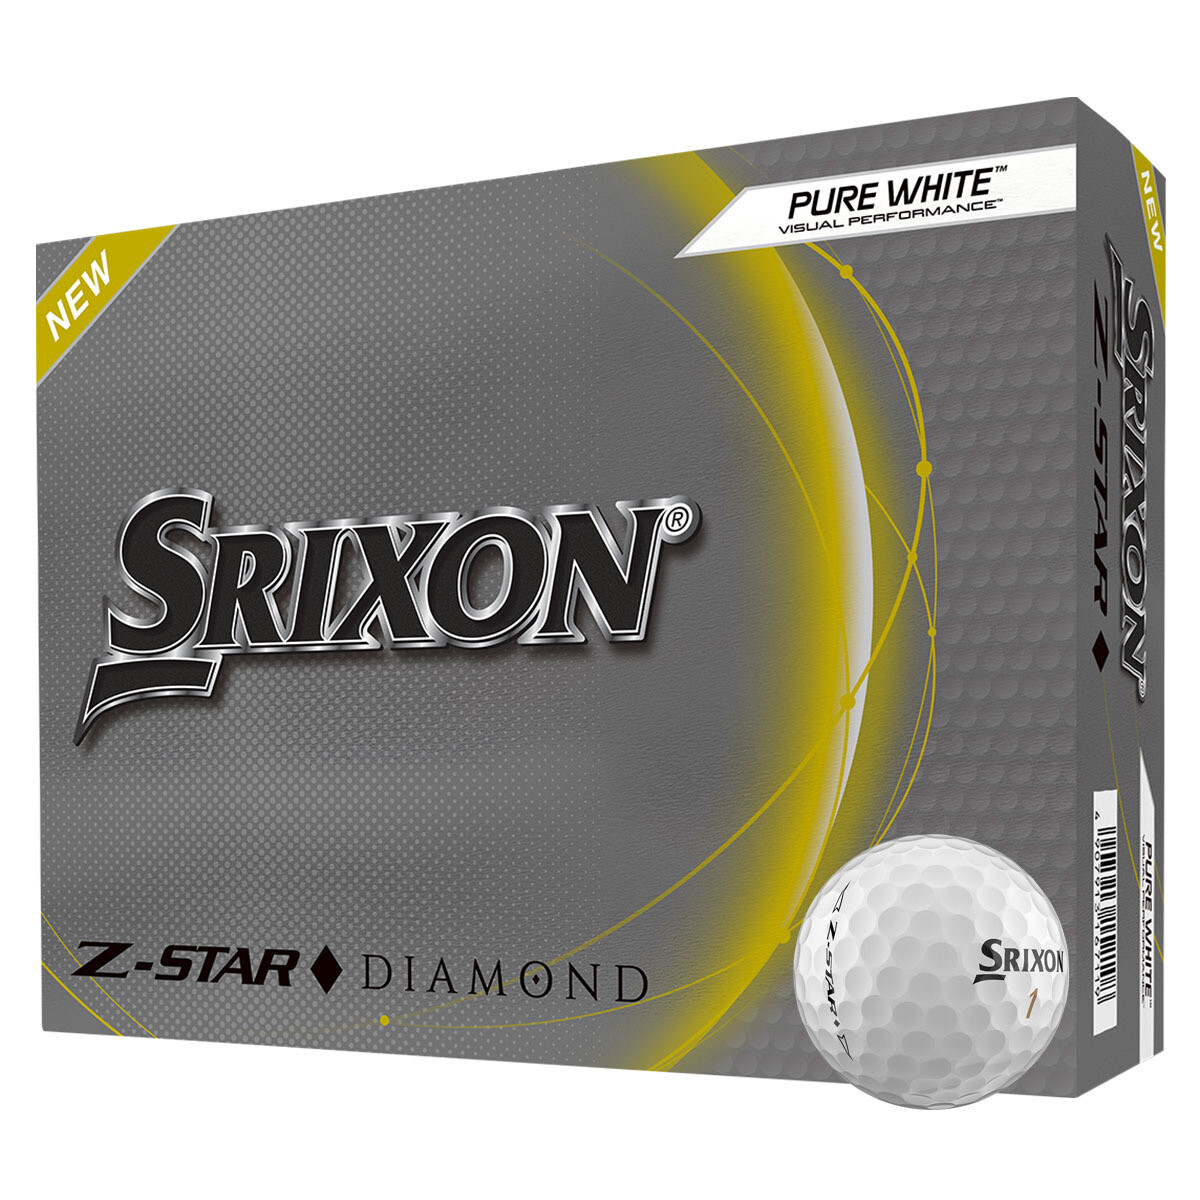 Srixon Z Star DIAMOND